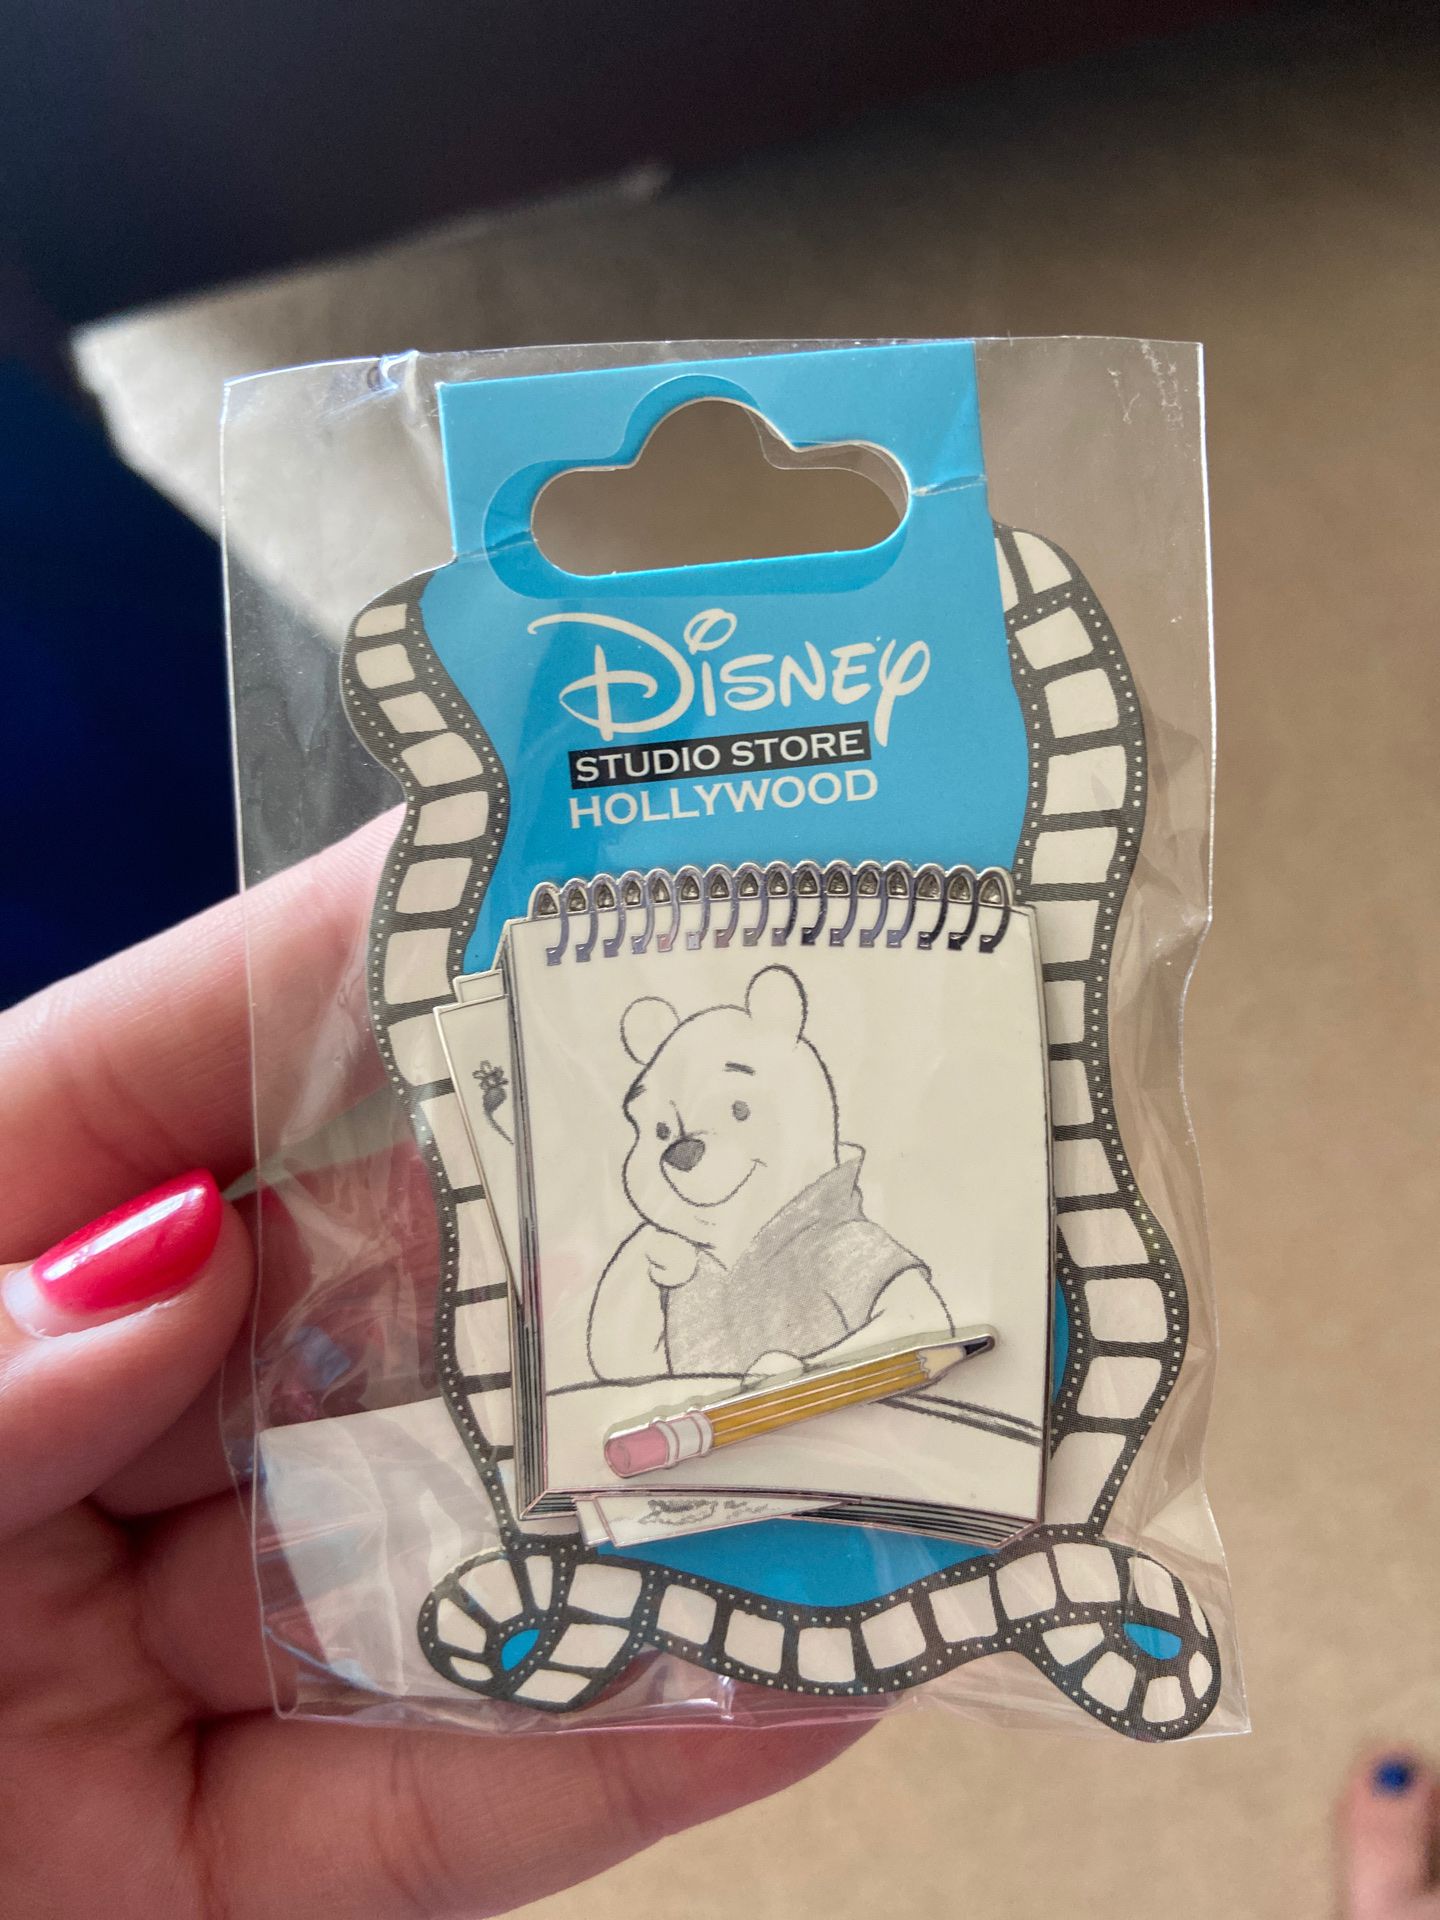 Disney studio store Hollywood Winnie the Pooh pin